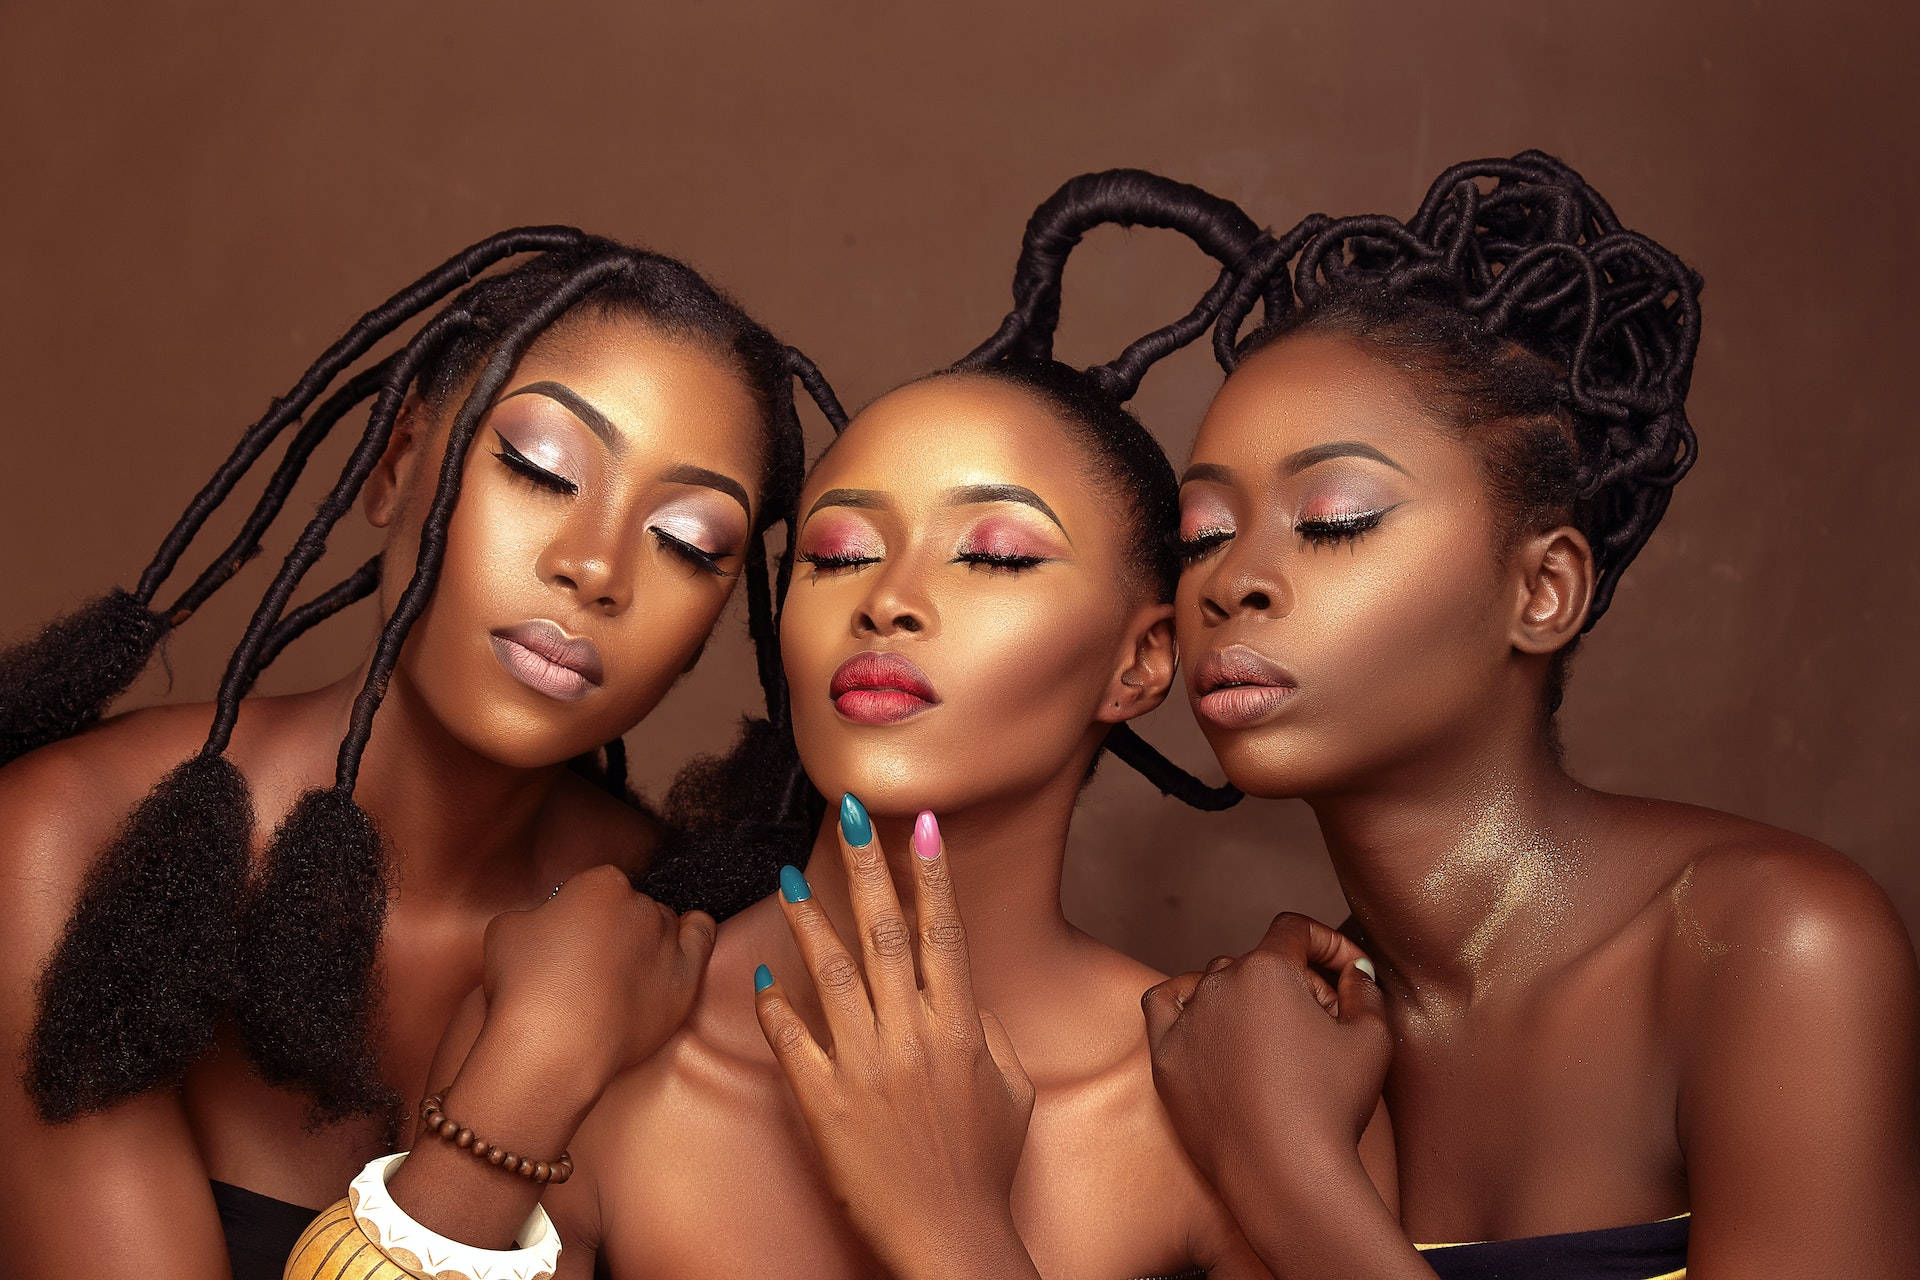 100+] Beautiful Black Women Pictures